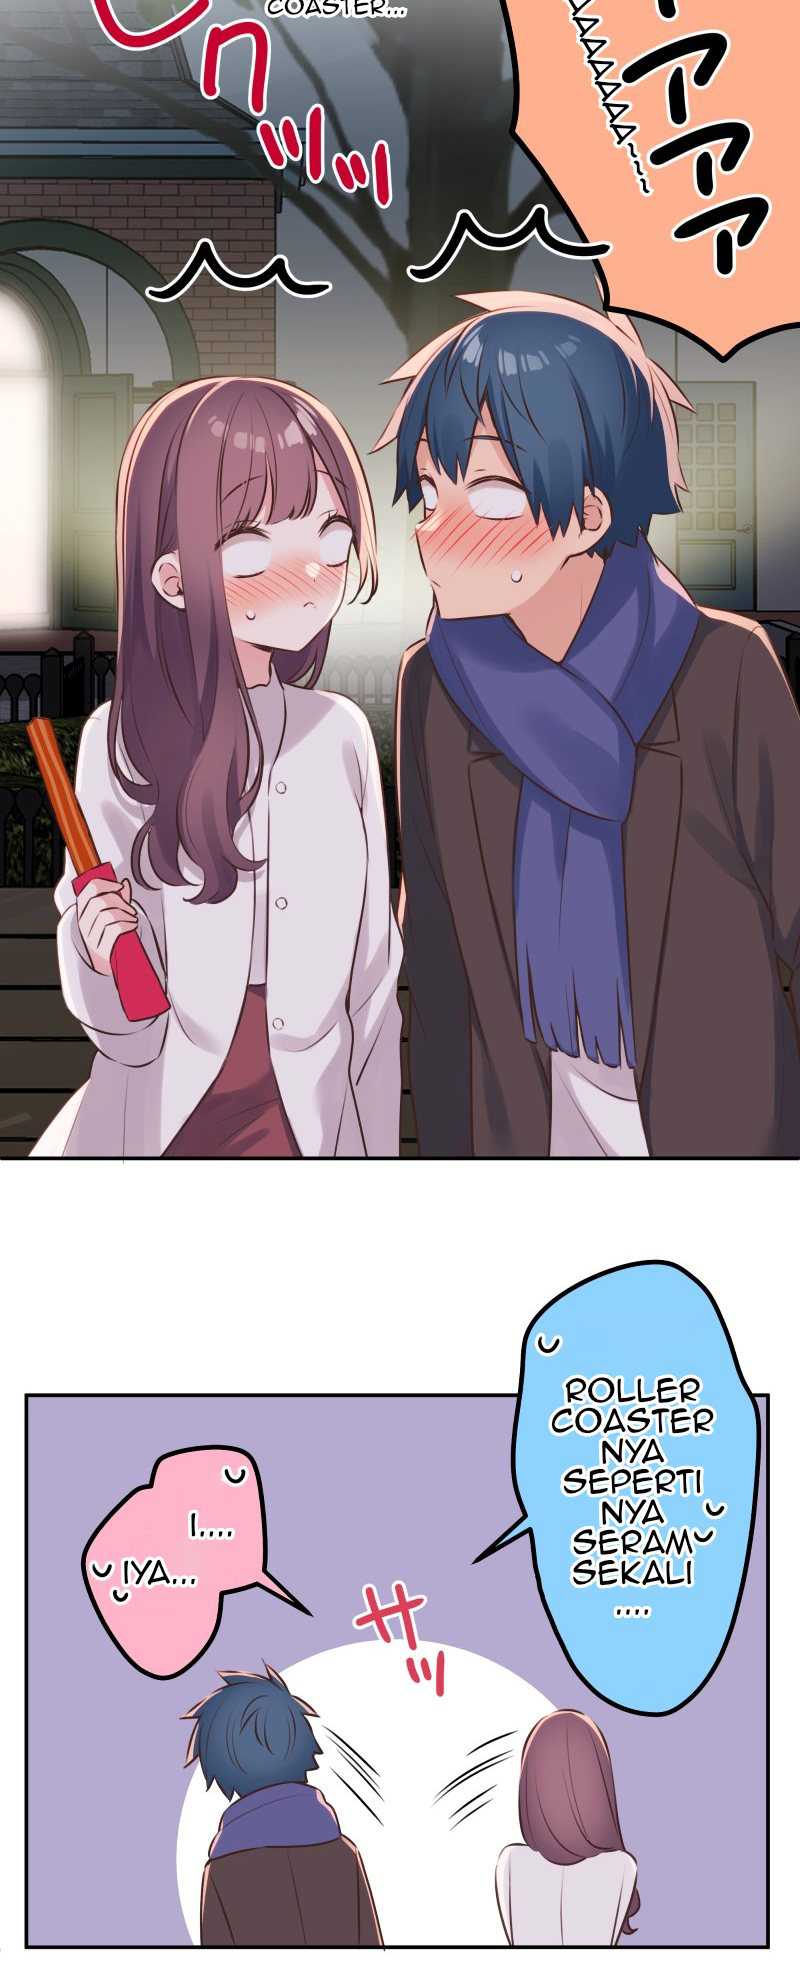 Waka-chan Is Flirty Again Chapter 114